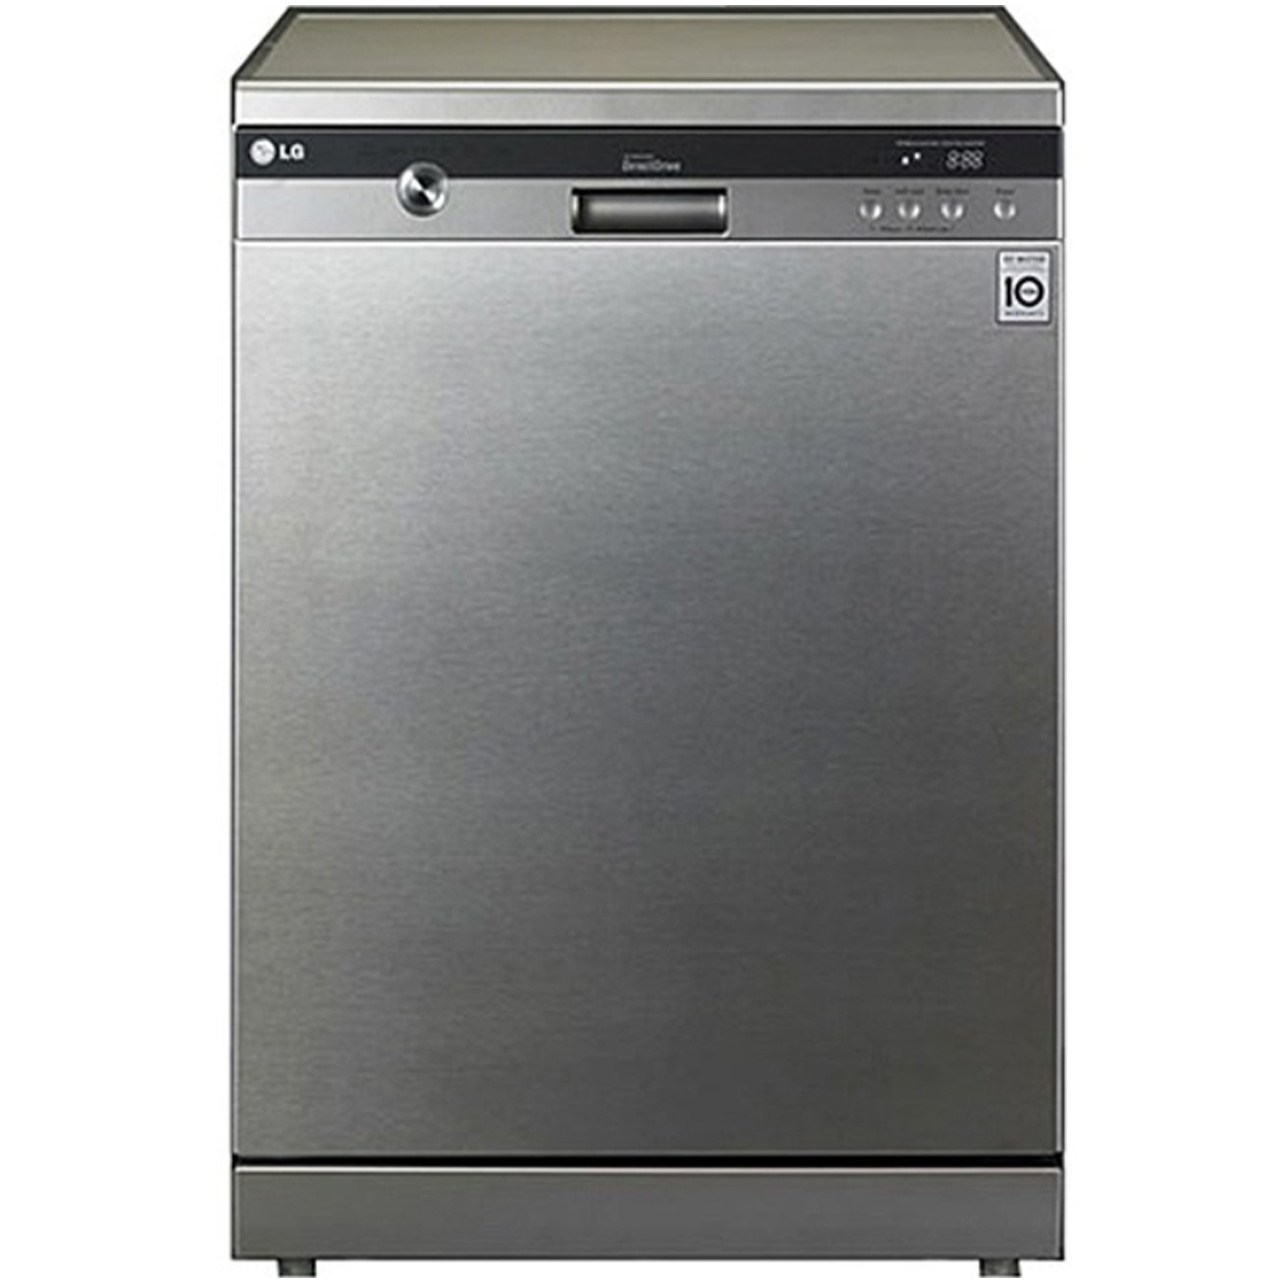 ماشین ظرفشویی ال جی مدل KD-823NT